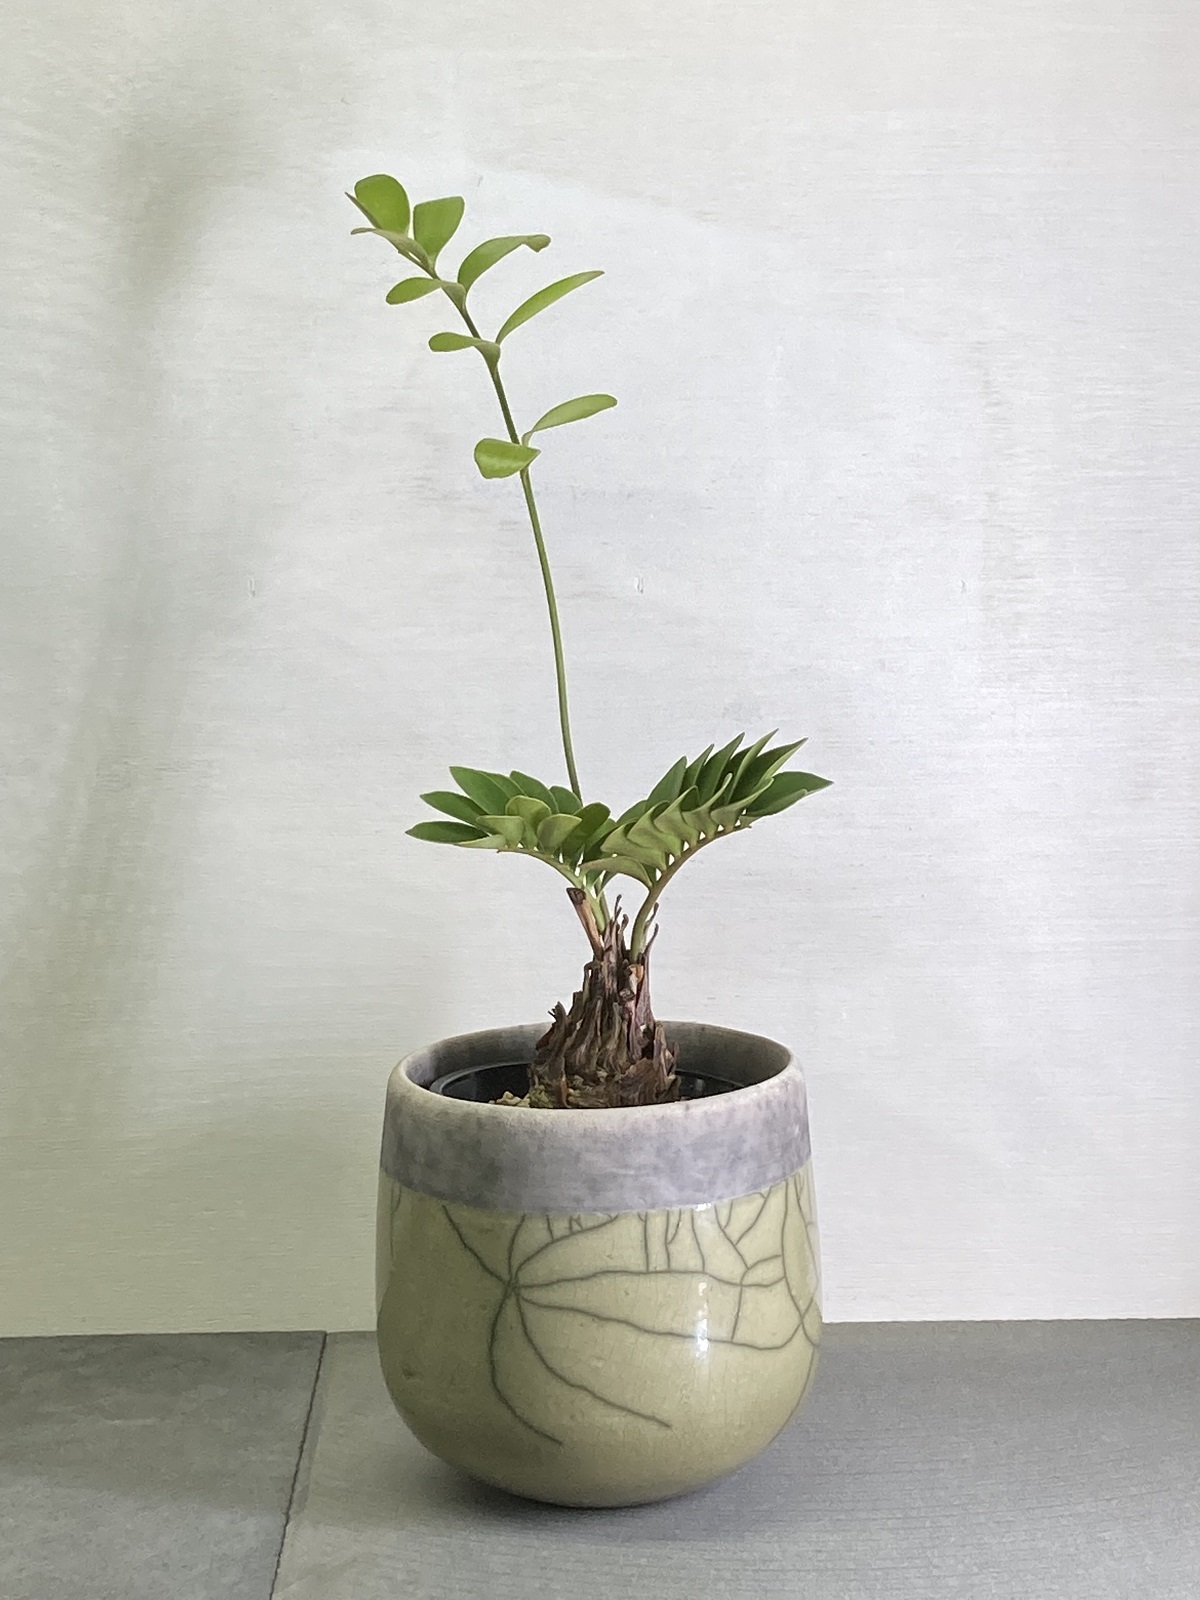 DOMANI MINSK（鉢） - 雨読堂 -UDOKUDO- 観葉植物と鉢のオンラインショップ